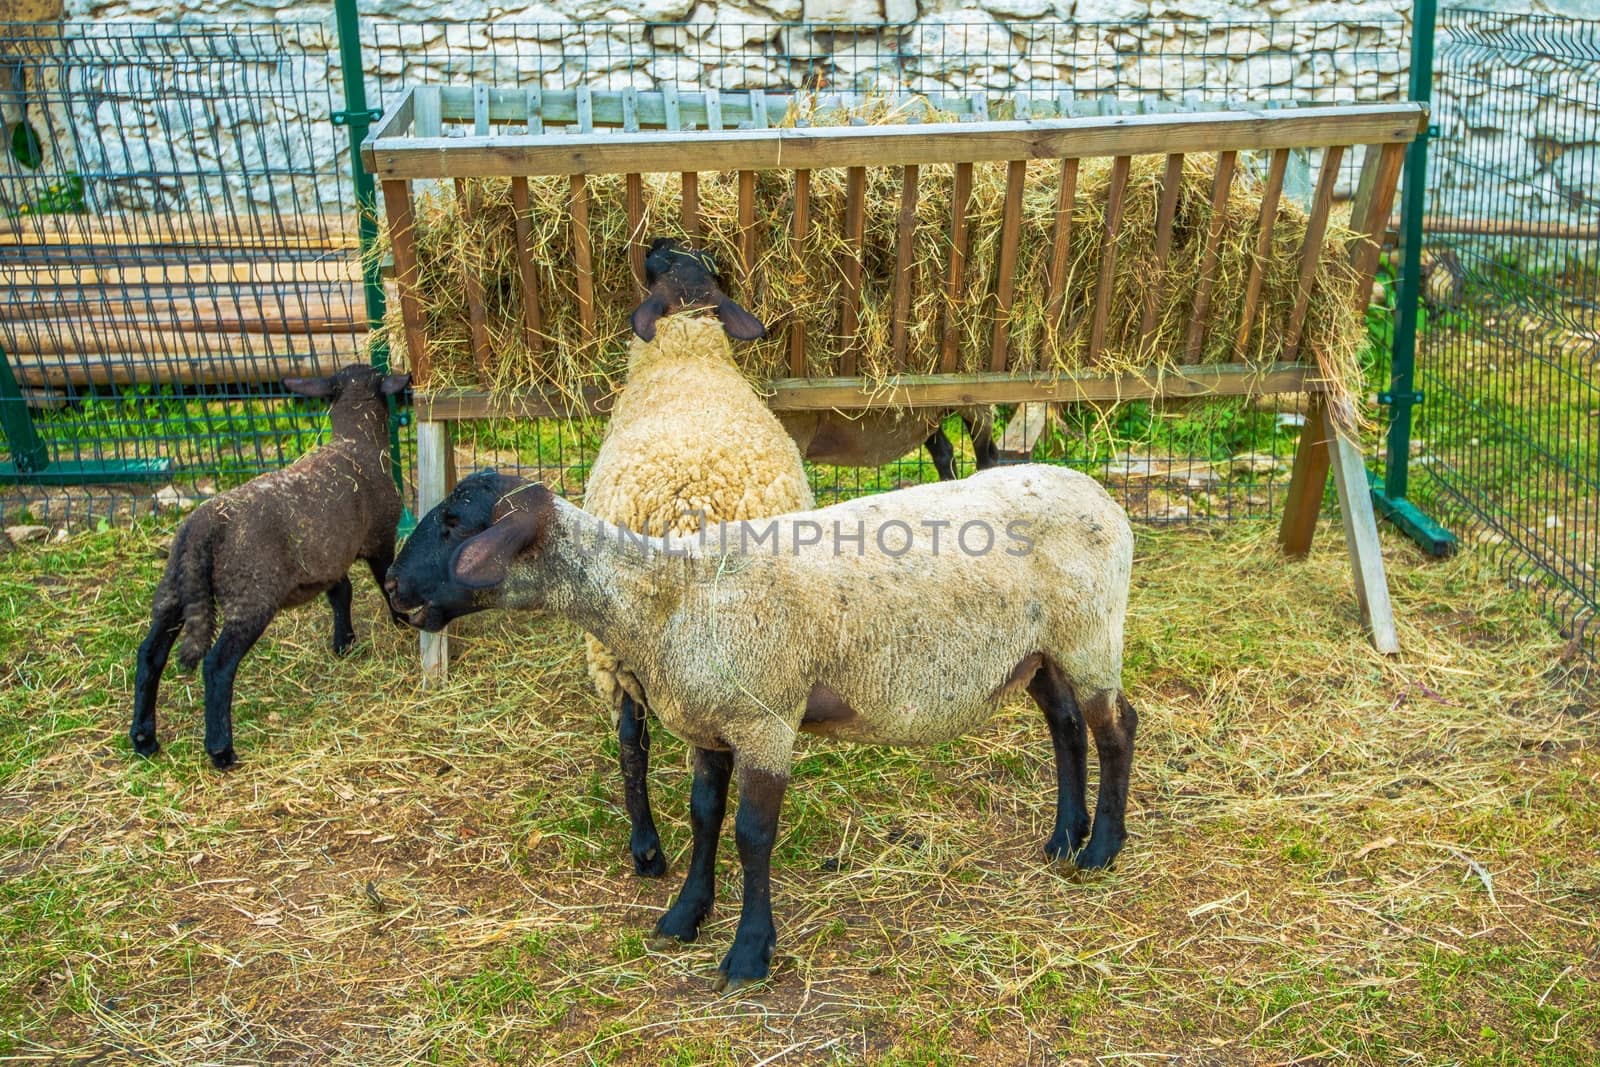 Sheep Feeder by welcomia